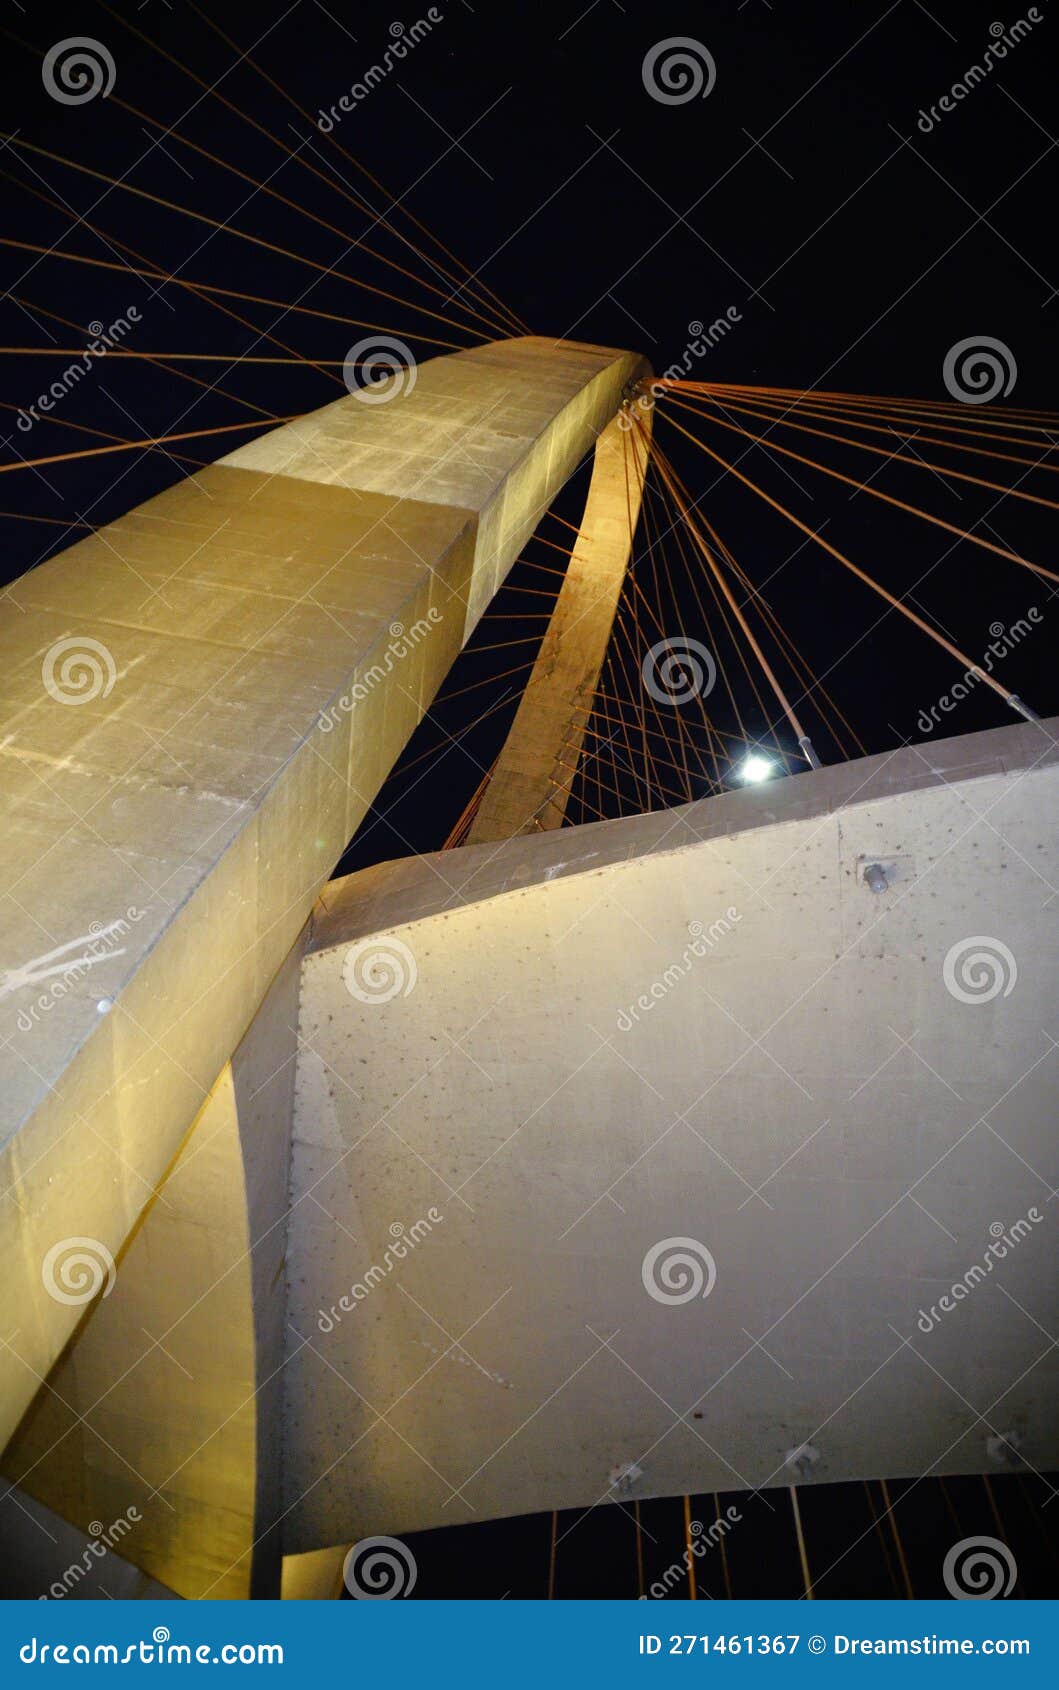 at night, the arco da inovaÃ§Ã£o taiada bridge and its lighting